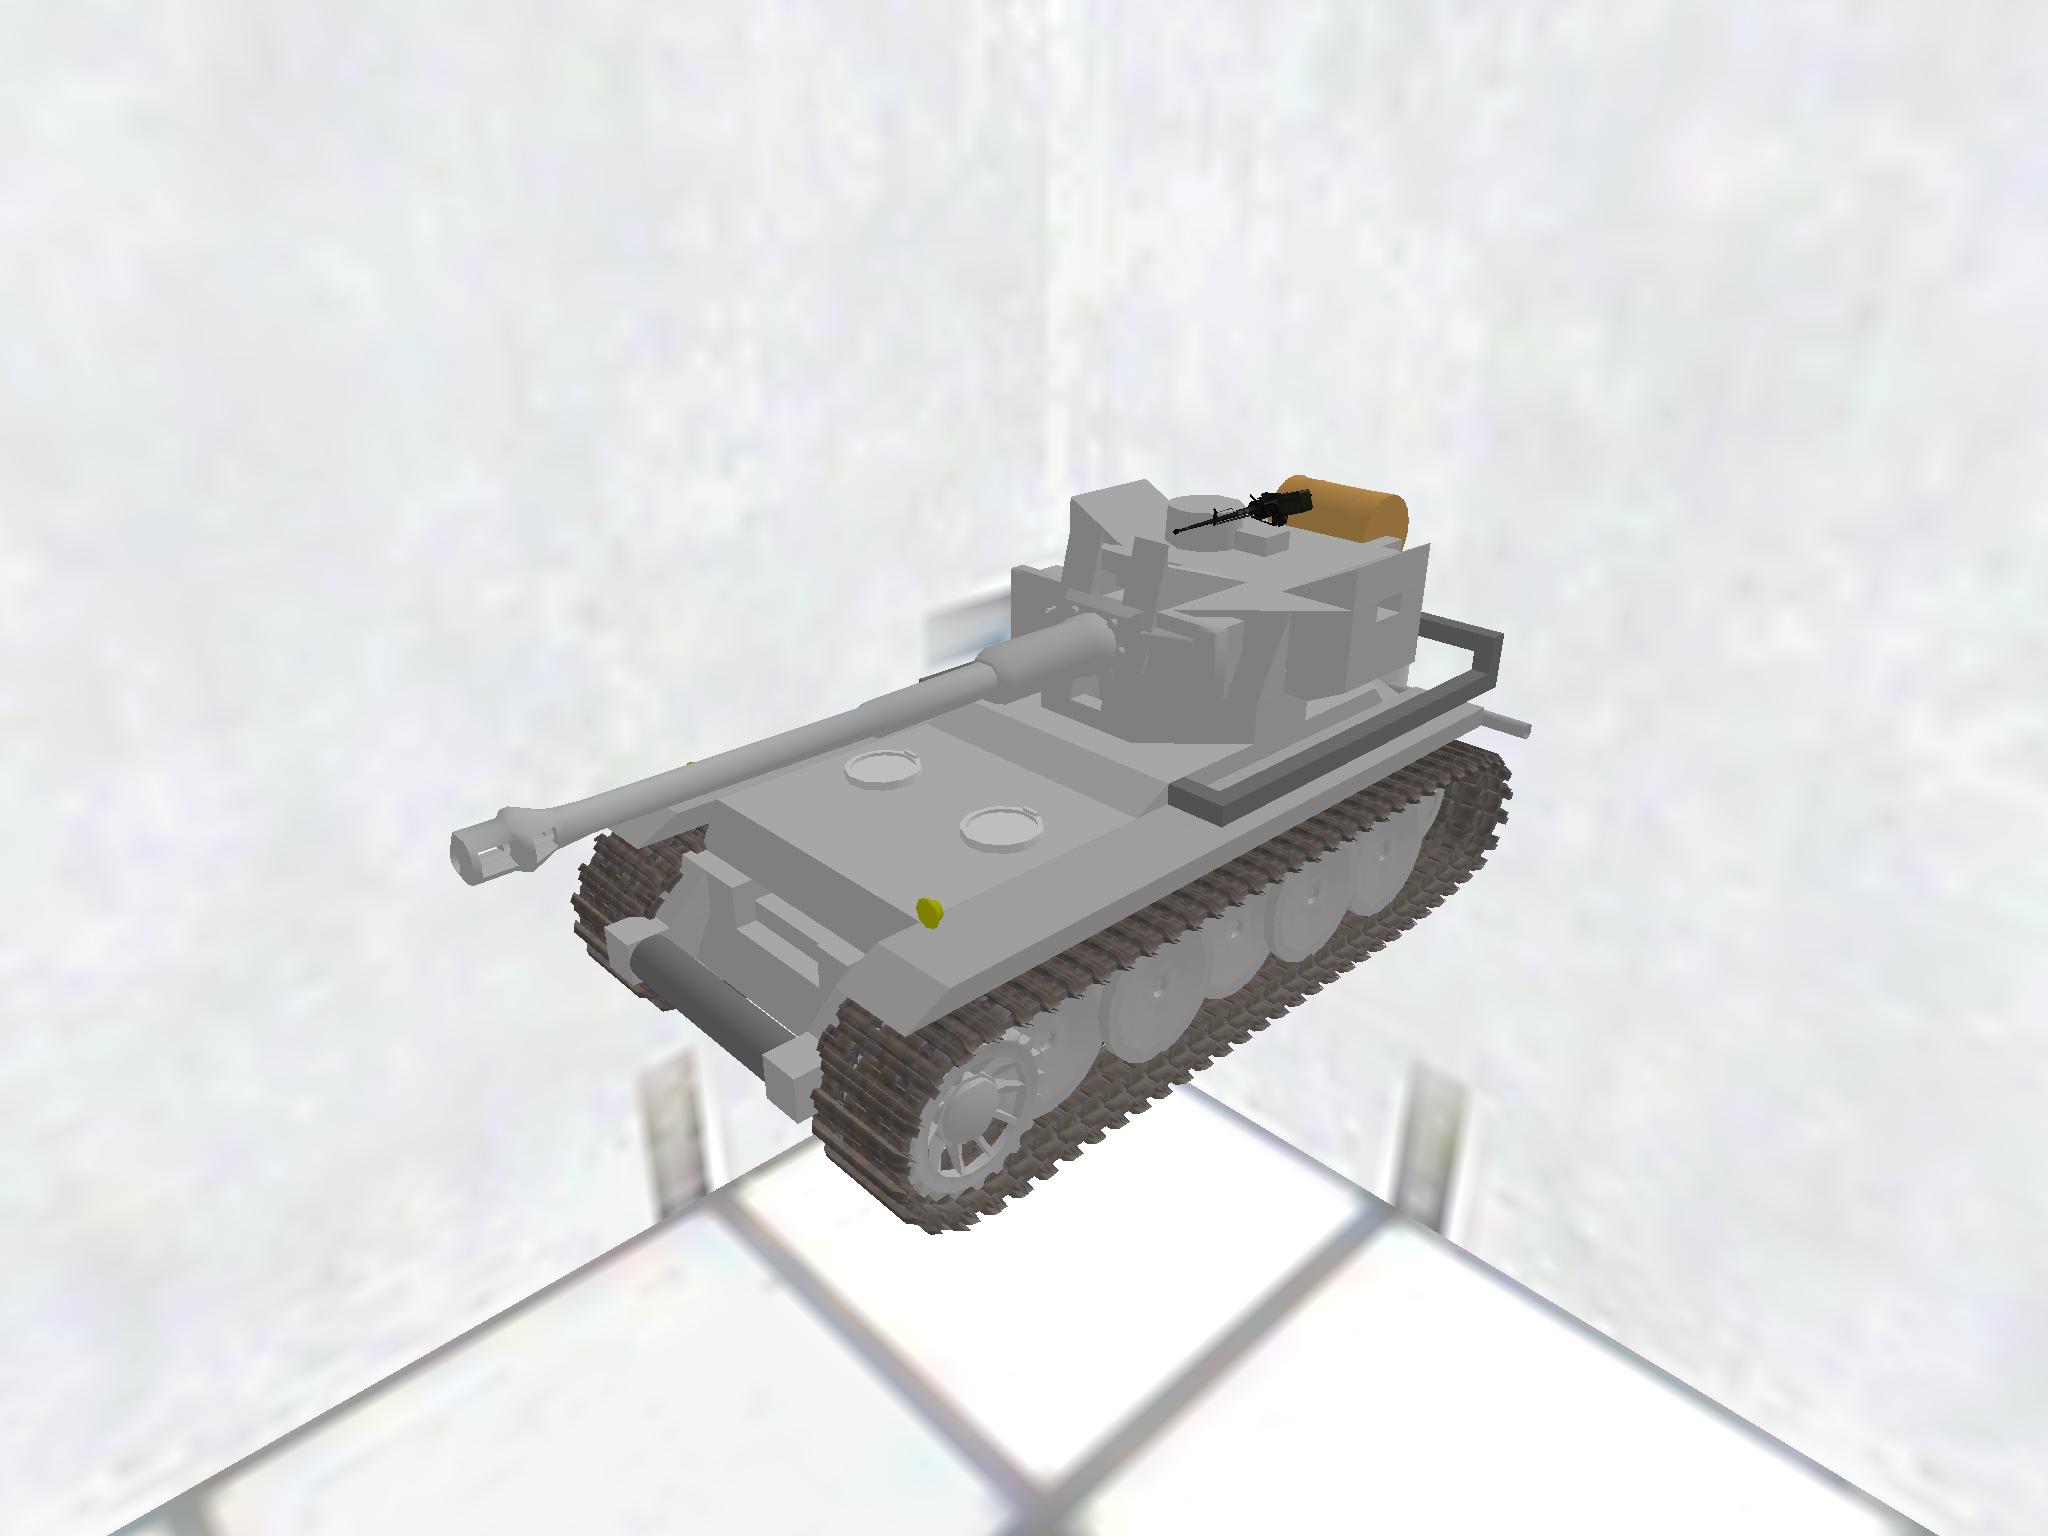 Light Tank